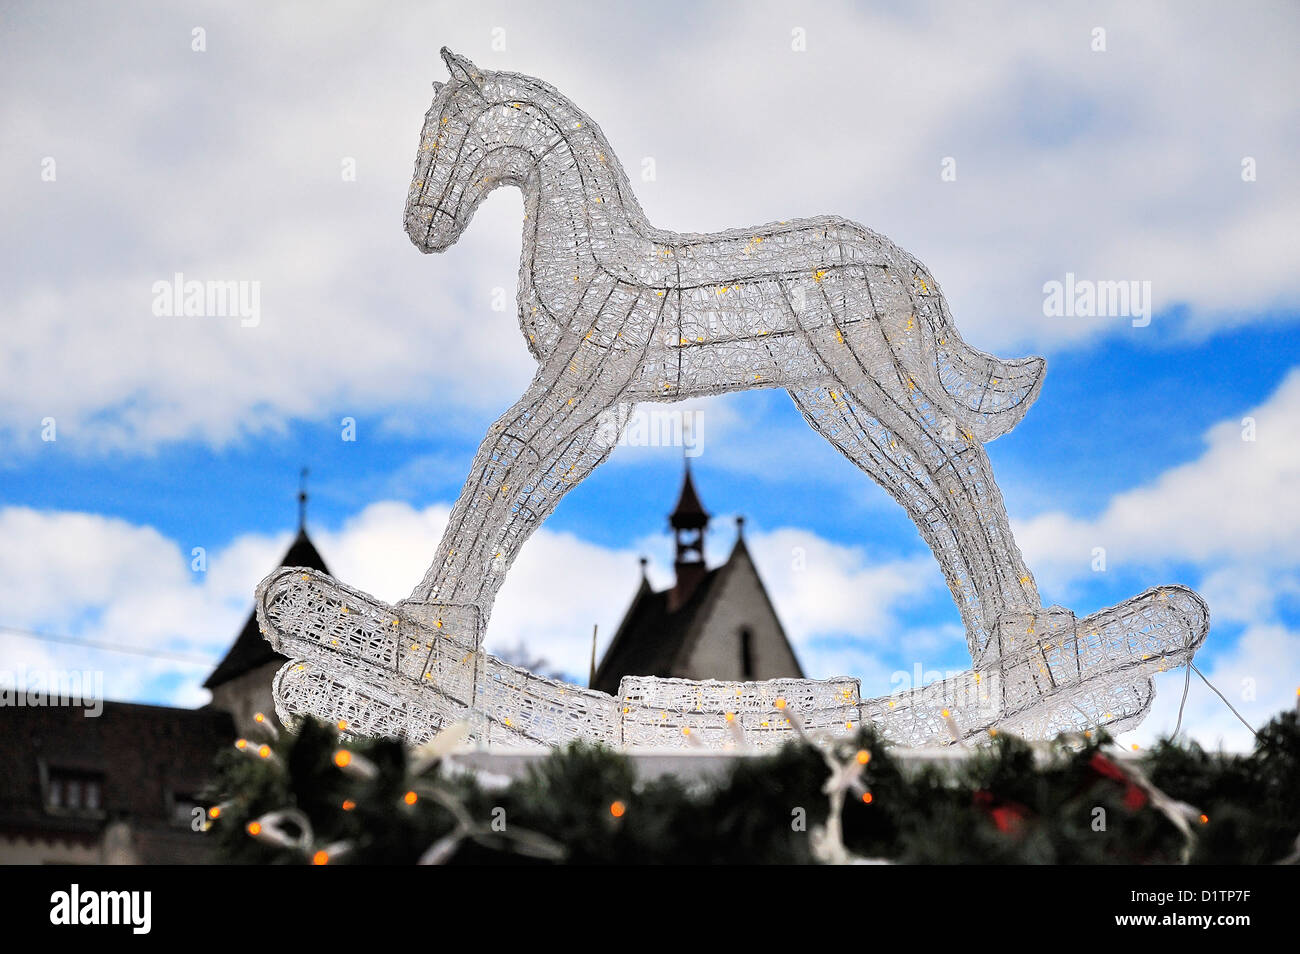 Horse shaped Christmas light at the Christmas Market in Basel, Switzerland. Stock Photo